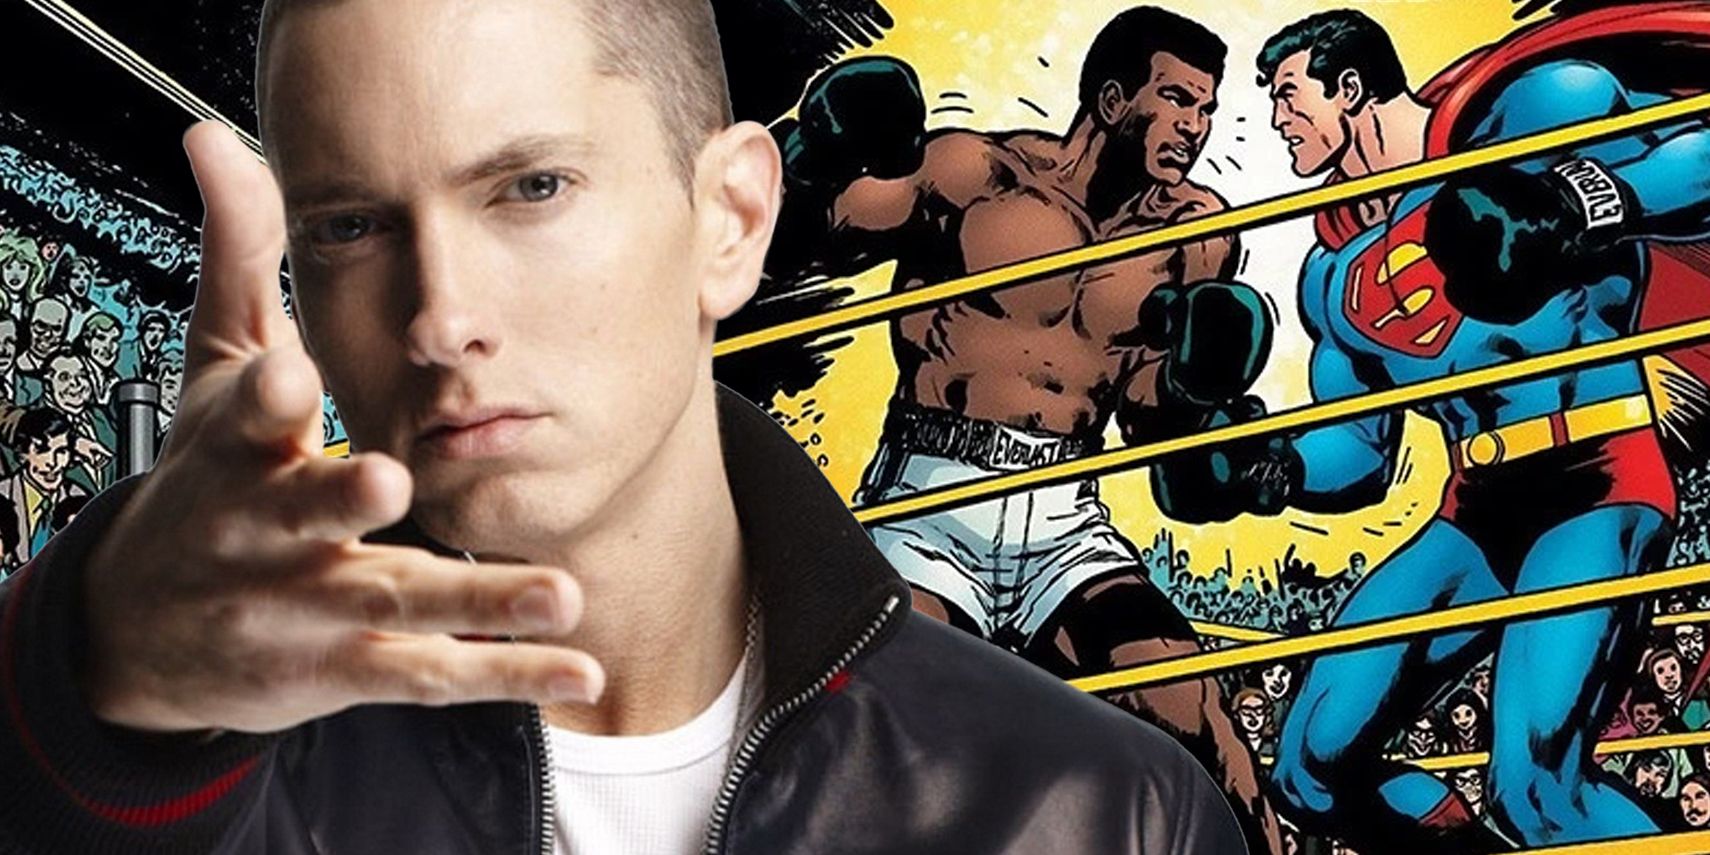 Eminem and Ali in comics.